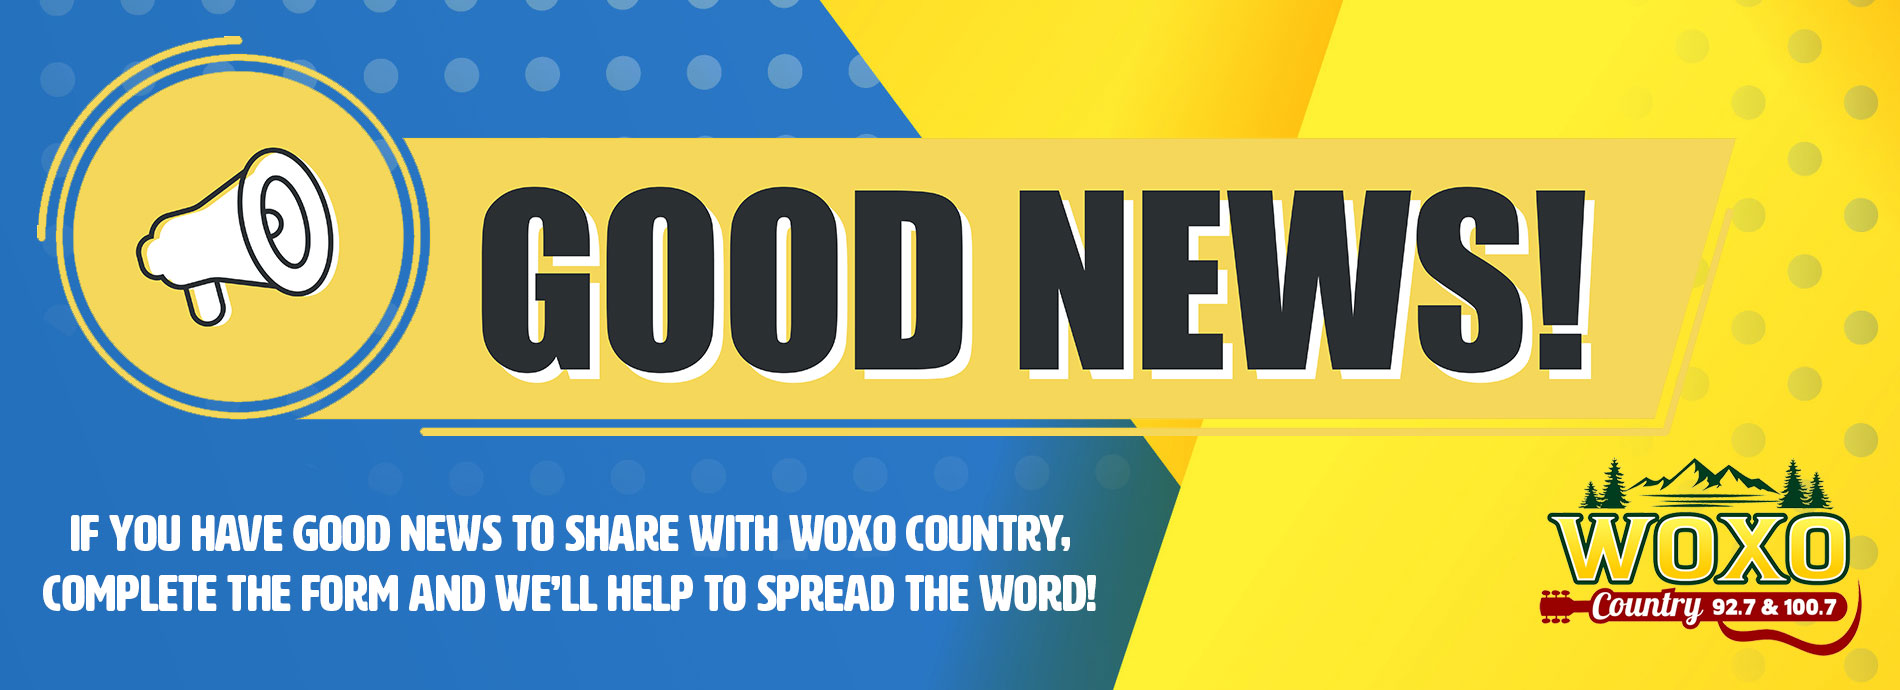 WOXO Good News